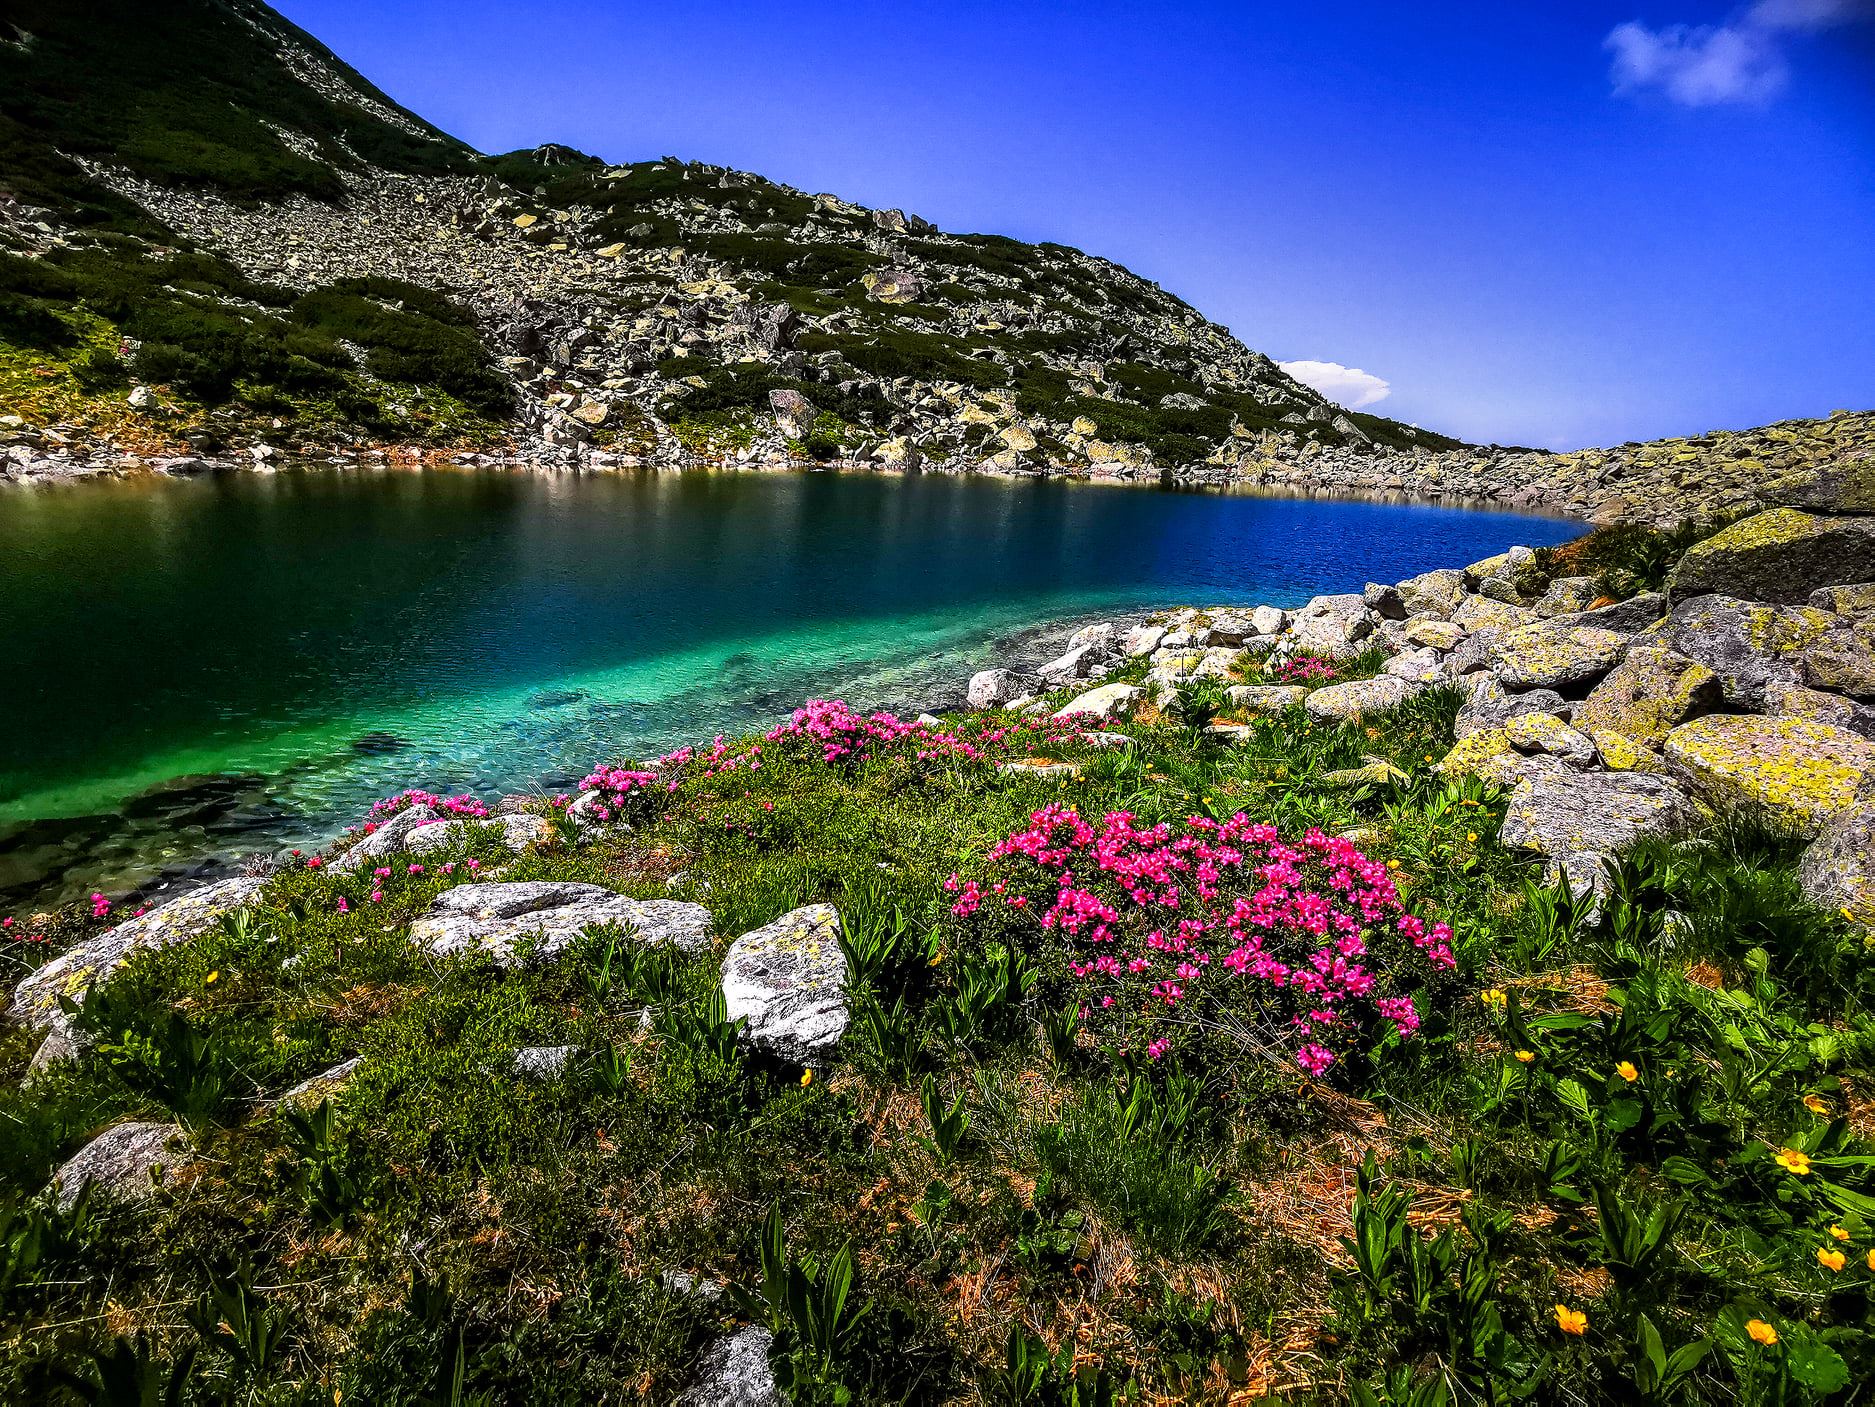  Lacul Ștevia - Daniel Morar